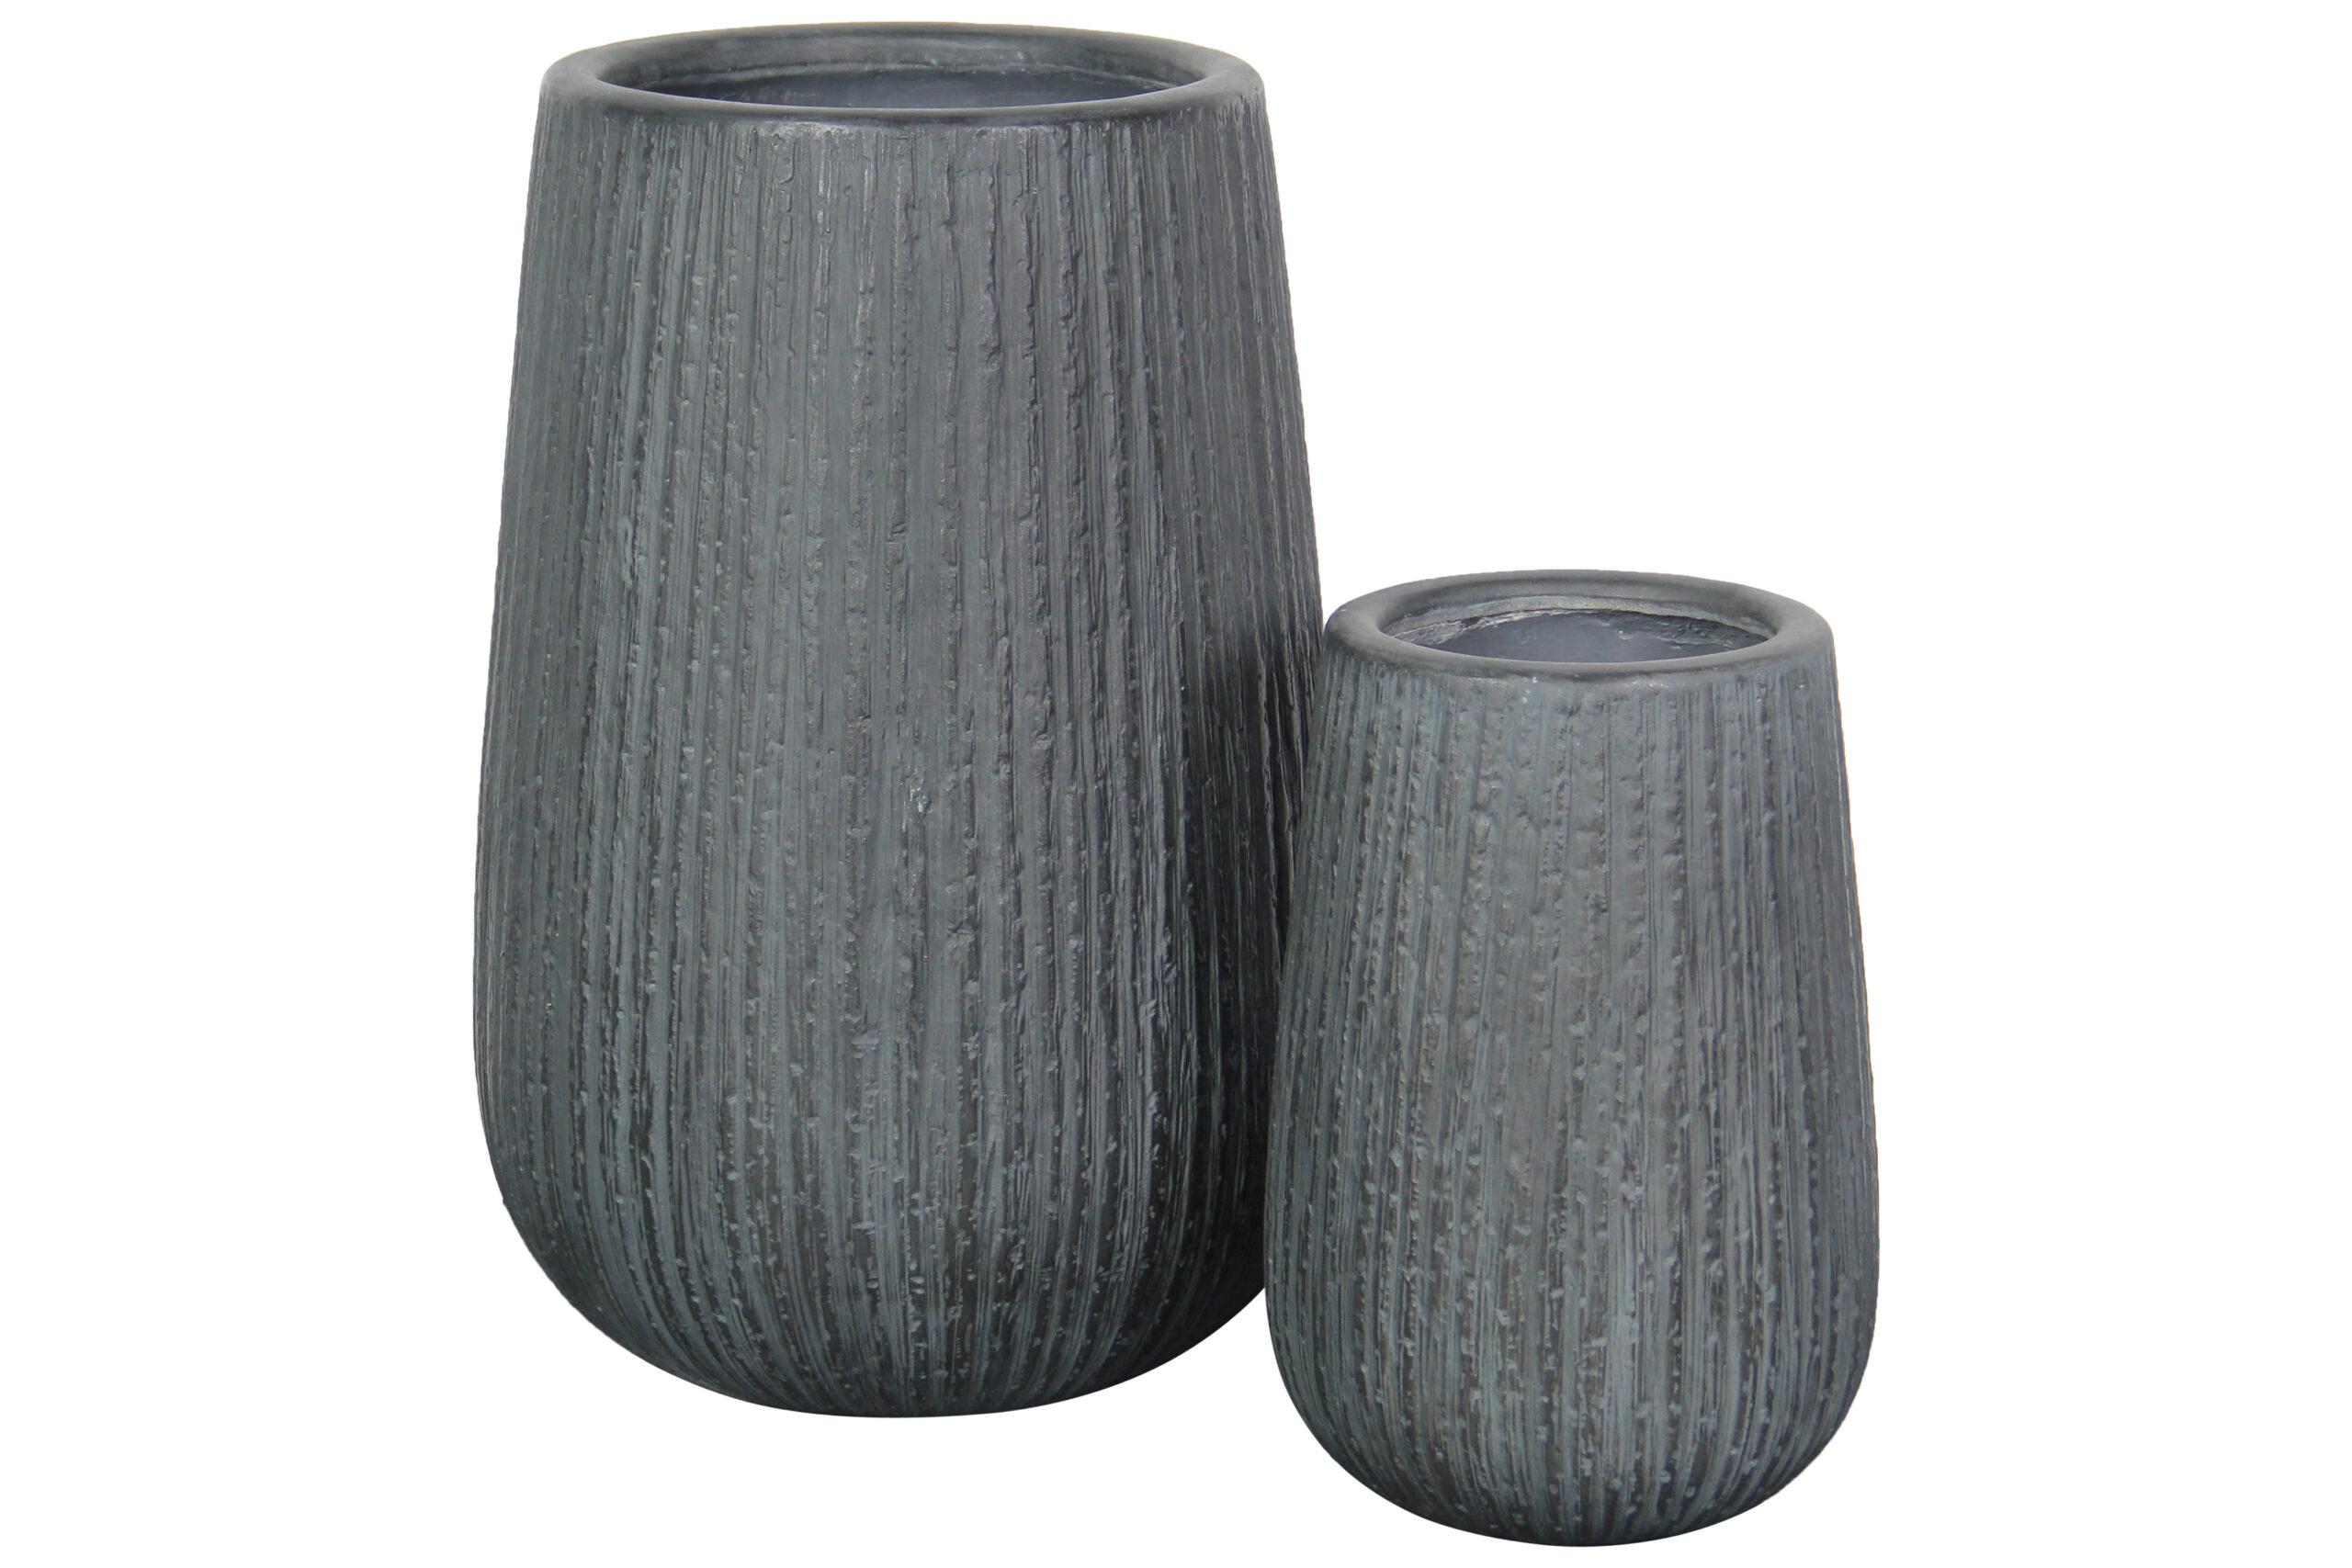 Clare belly vase set 2 – Antique grey